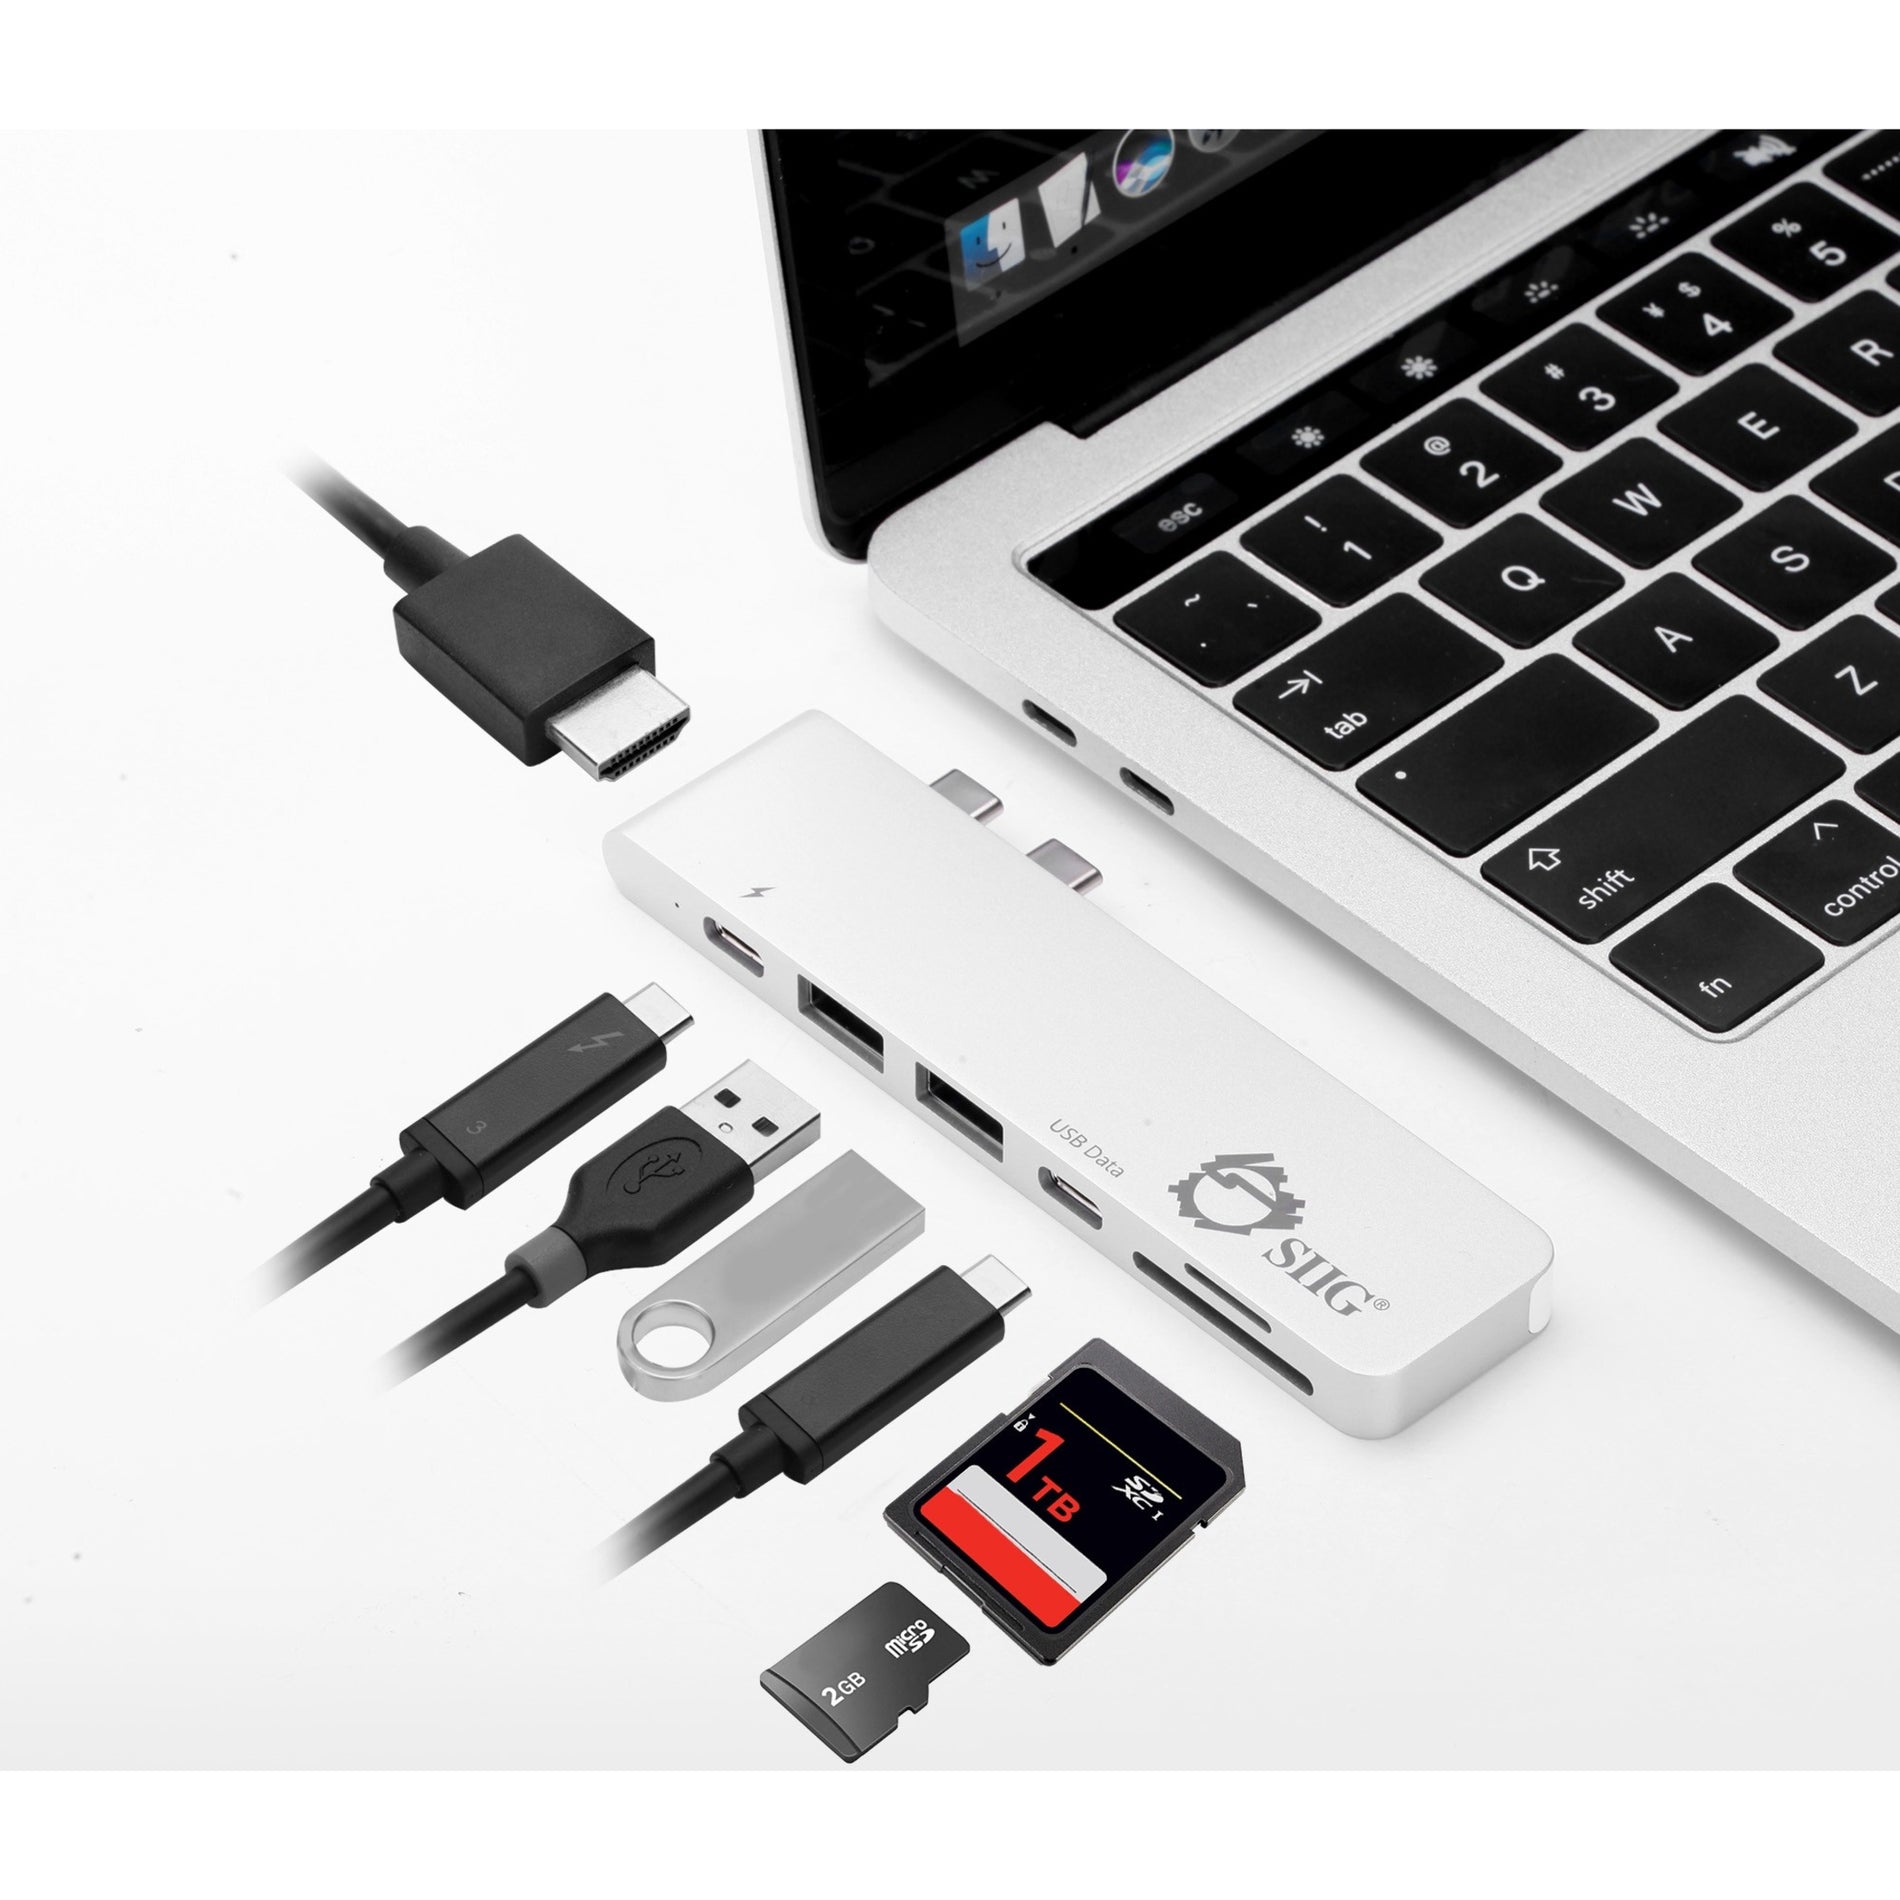 SIIG JU-TB0412-S1 Thunderbolt 3 USB-C Hub HDMI with Card Reader & PD Adapter - Silver, 2 Year Warranty, USB Type C